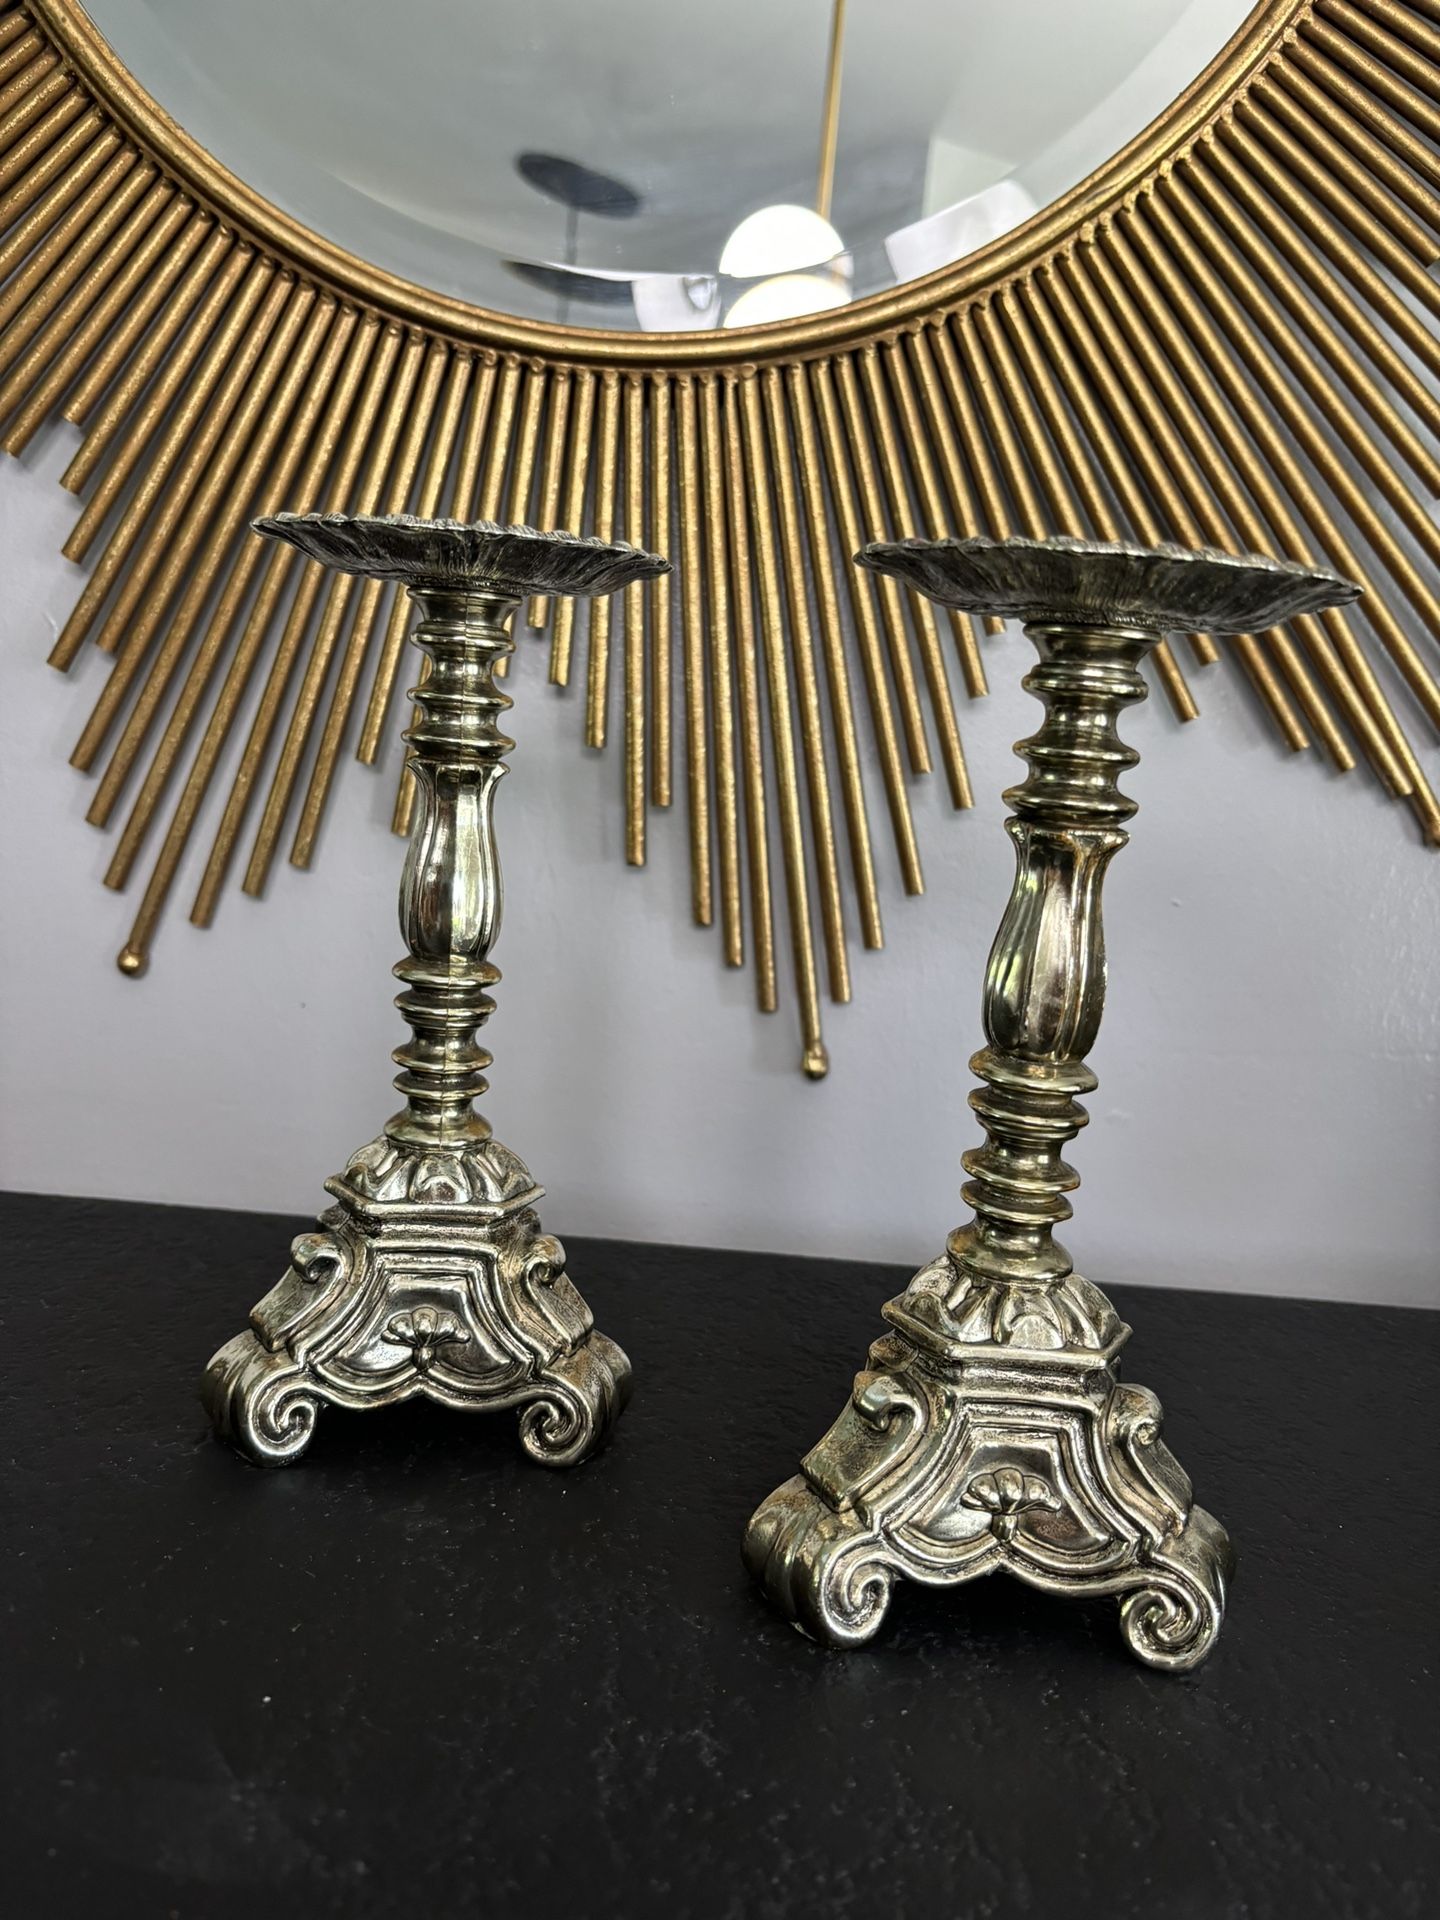 Pair Of Vintage Rubel Silvertone Candle Holders 